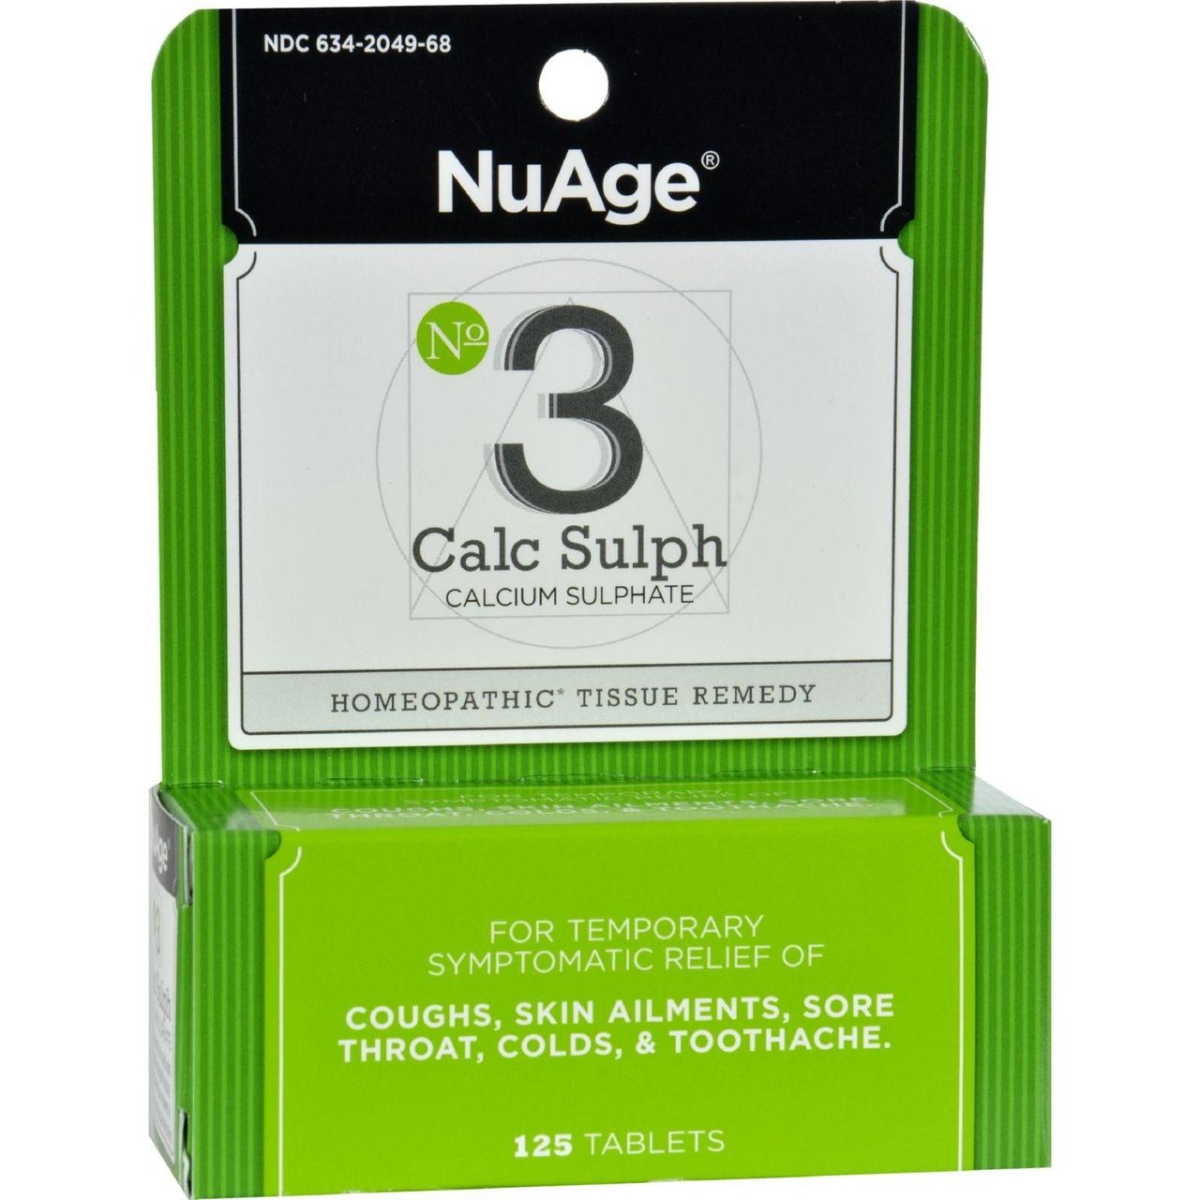 Hg0346767 Nuage No 3 Calc Sulph - 125 Tablets